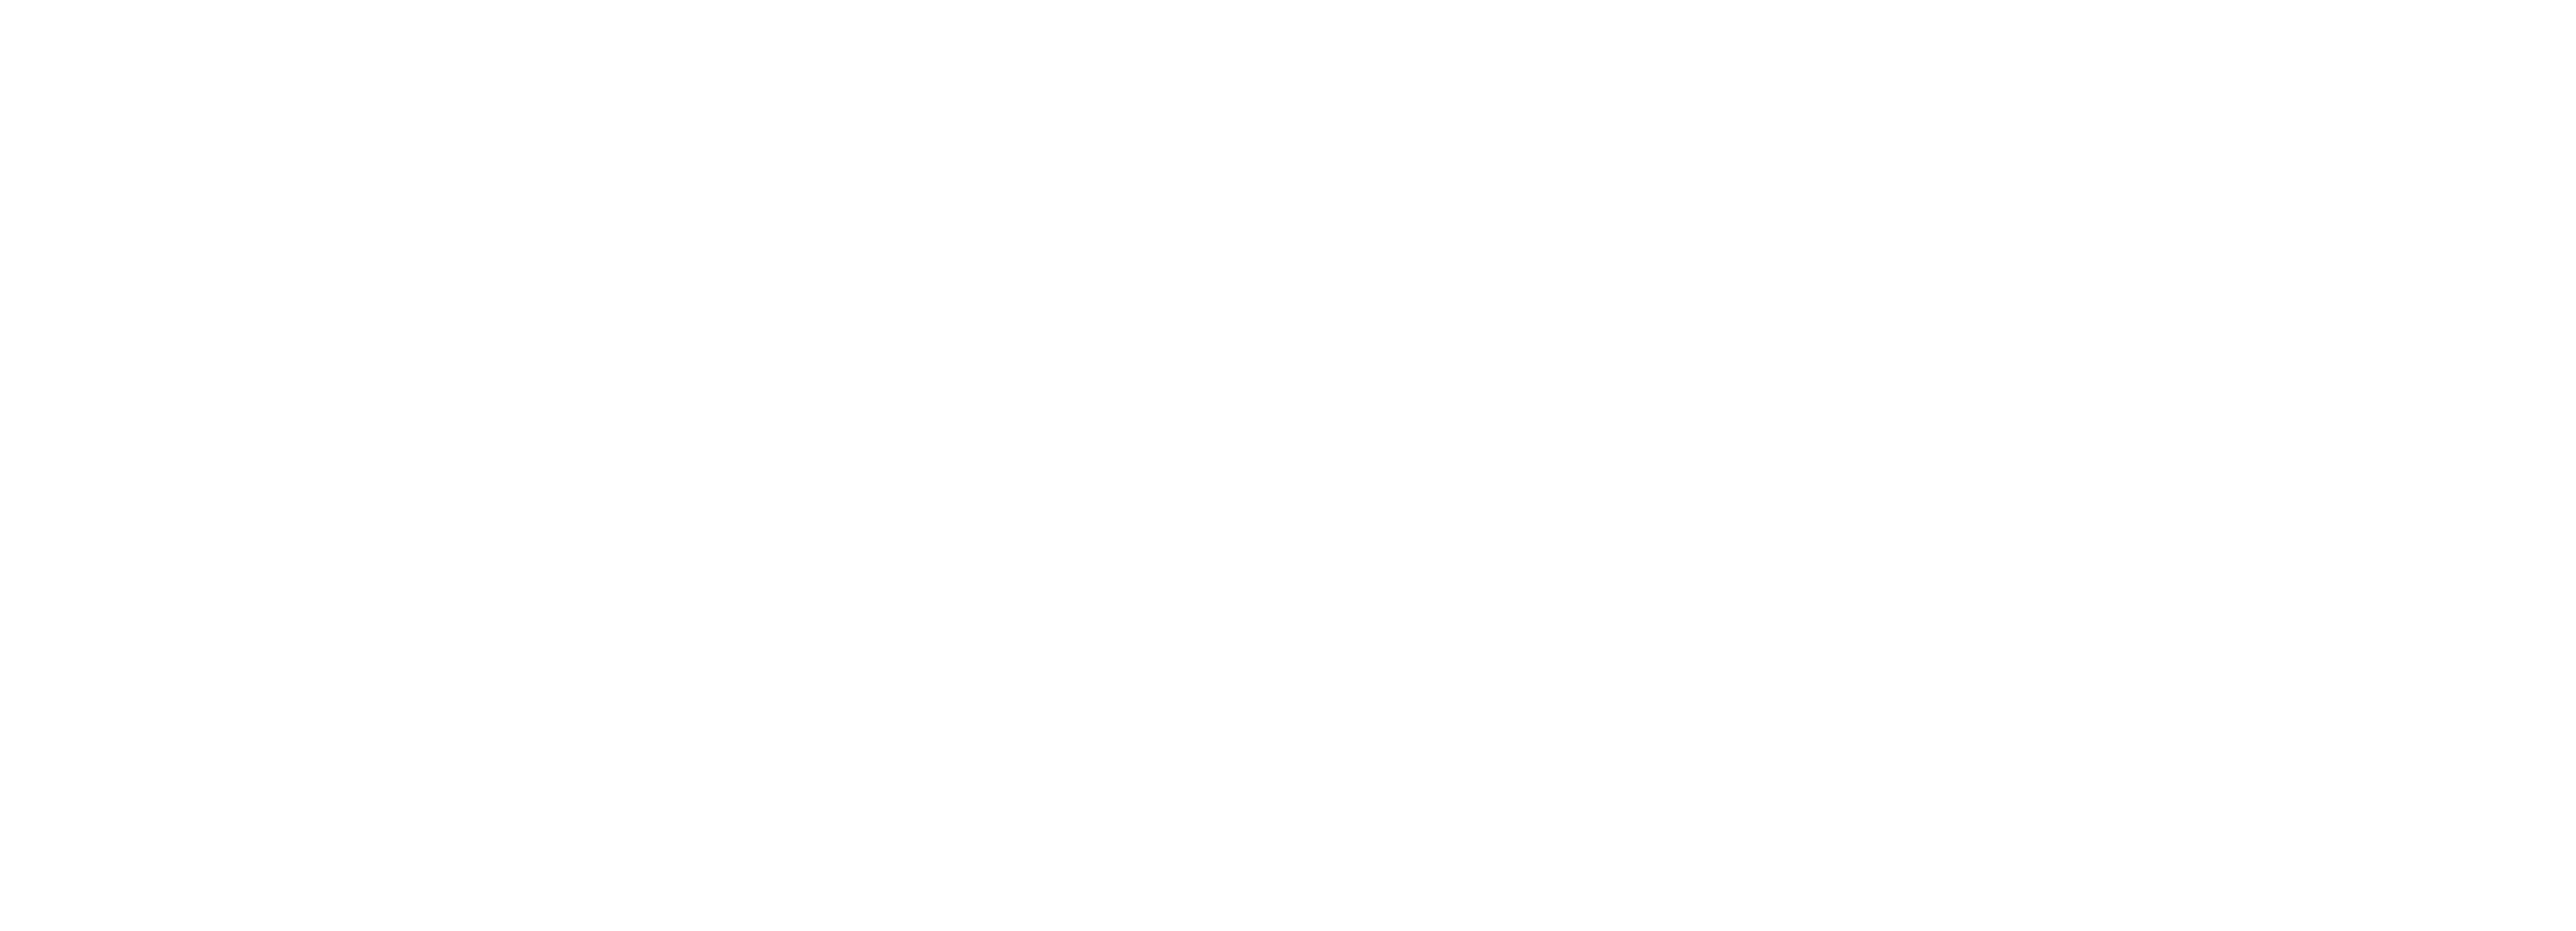 garden of e logo white transparent